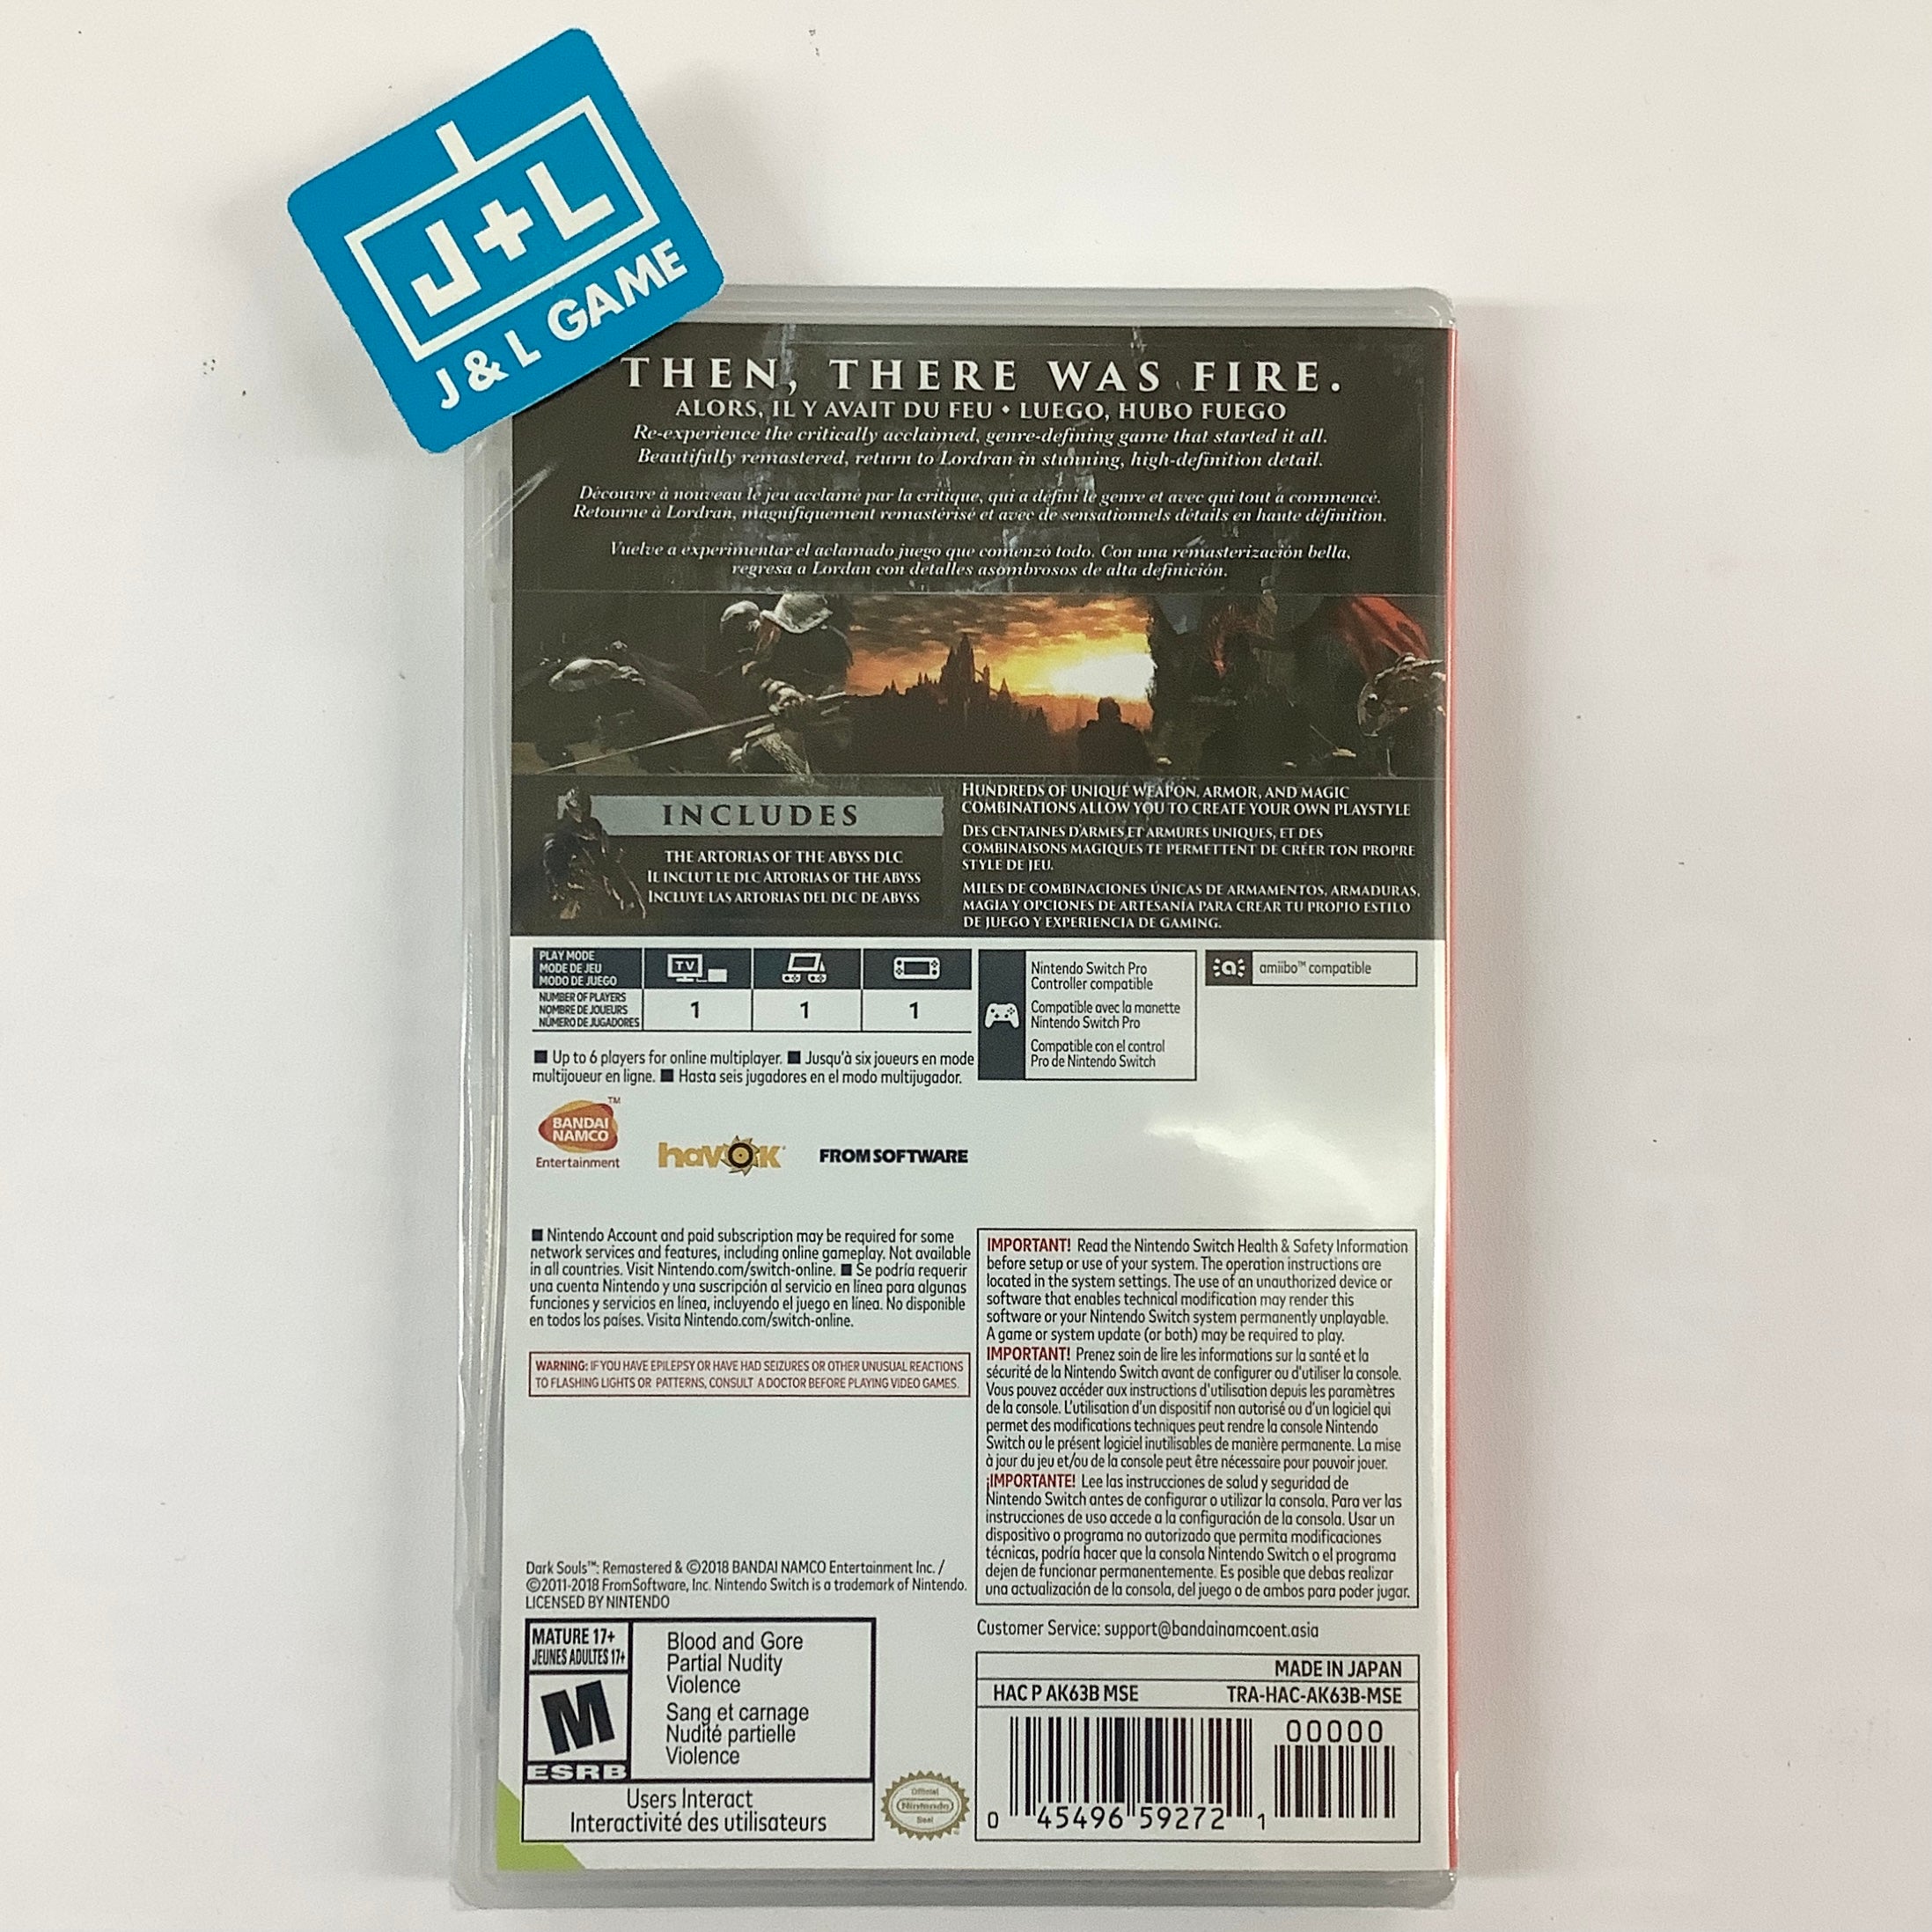 Dark Souls: Remastered (World Edition) - (NSW) Nintendo Switch Video Games BANDAI NAMCO Entertainment   